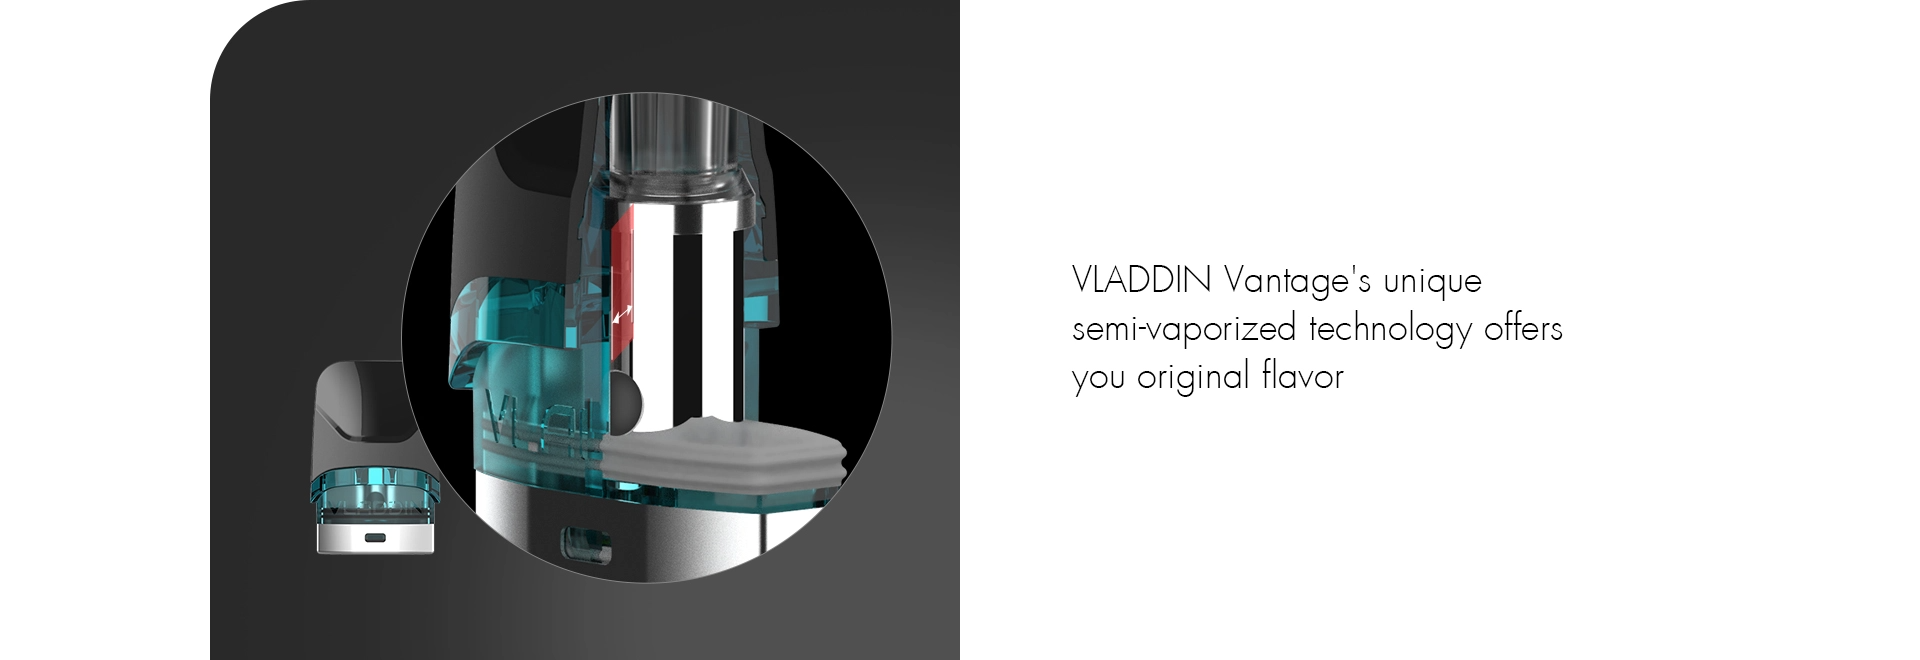 A Vladdin Vantage vape pod with text describing its technology.